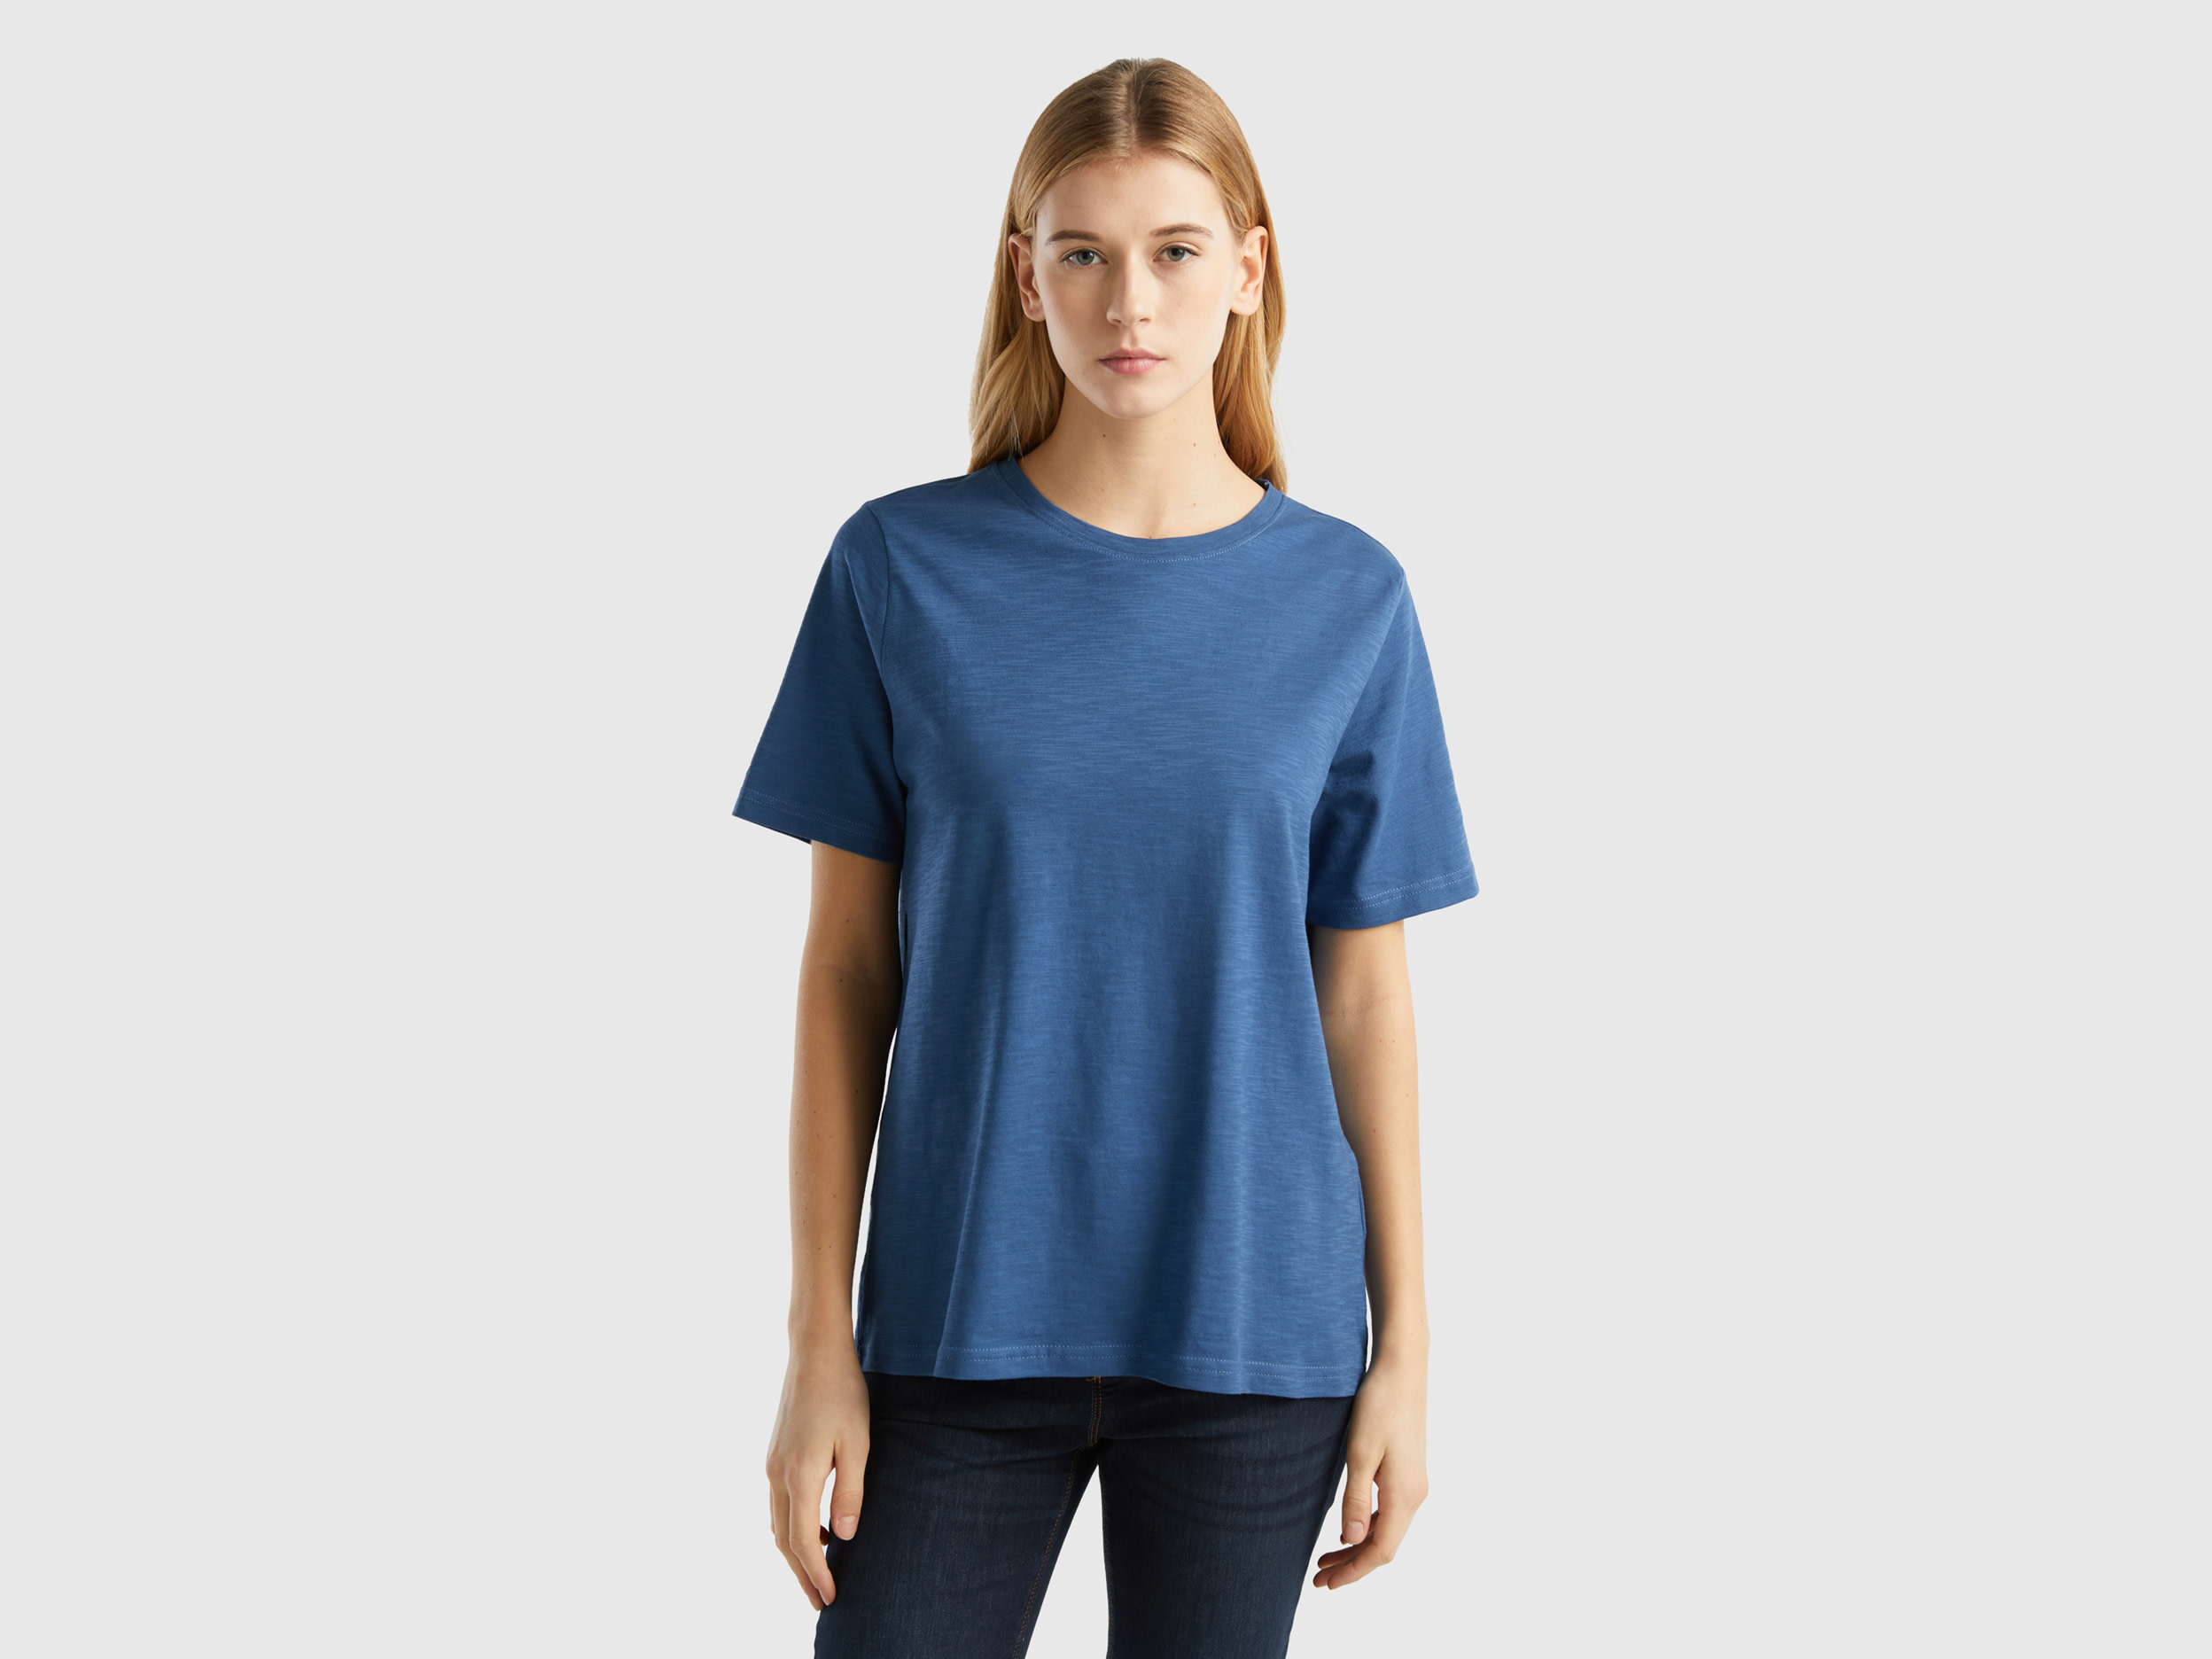 Benetton, Crew Neck T-shirt In Slub Cotton, size XL, Air Force Blue, Women